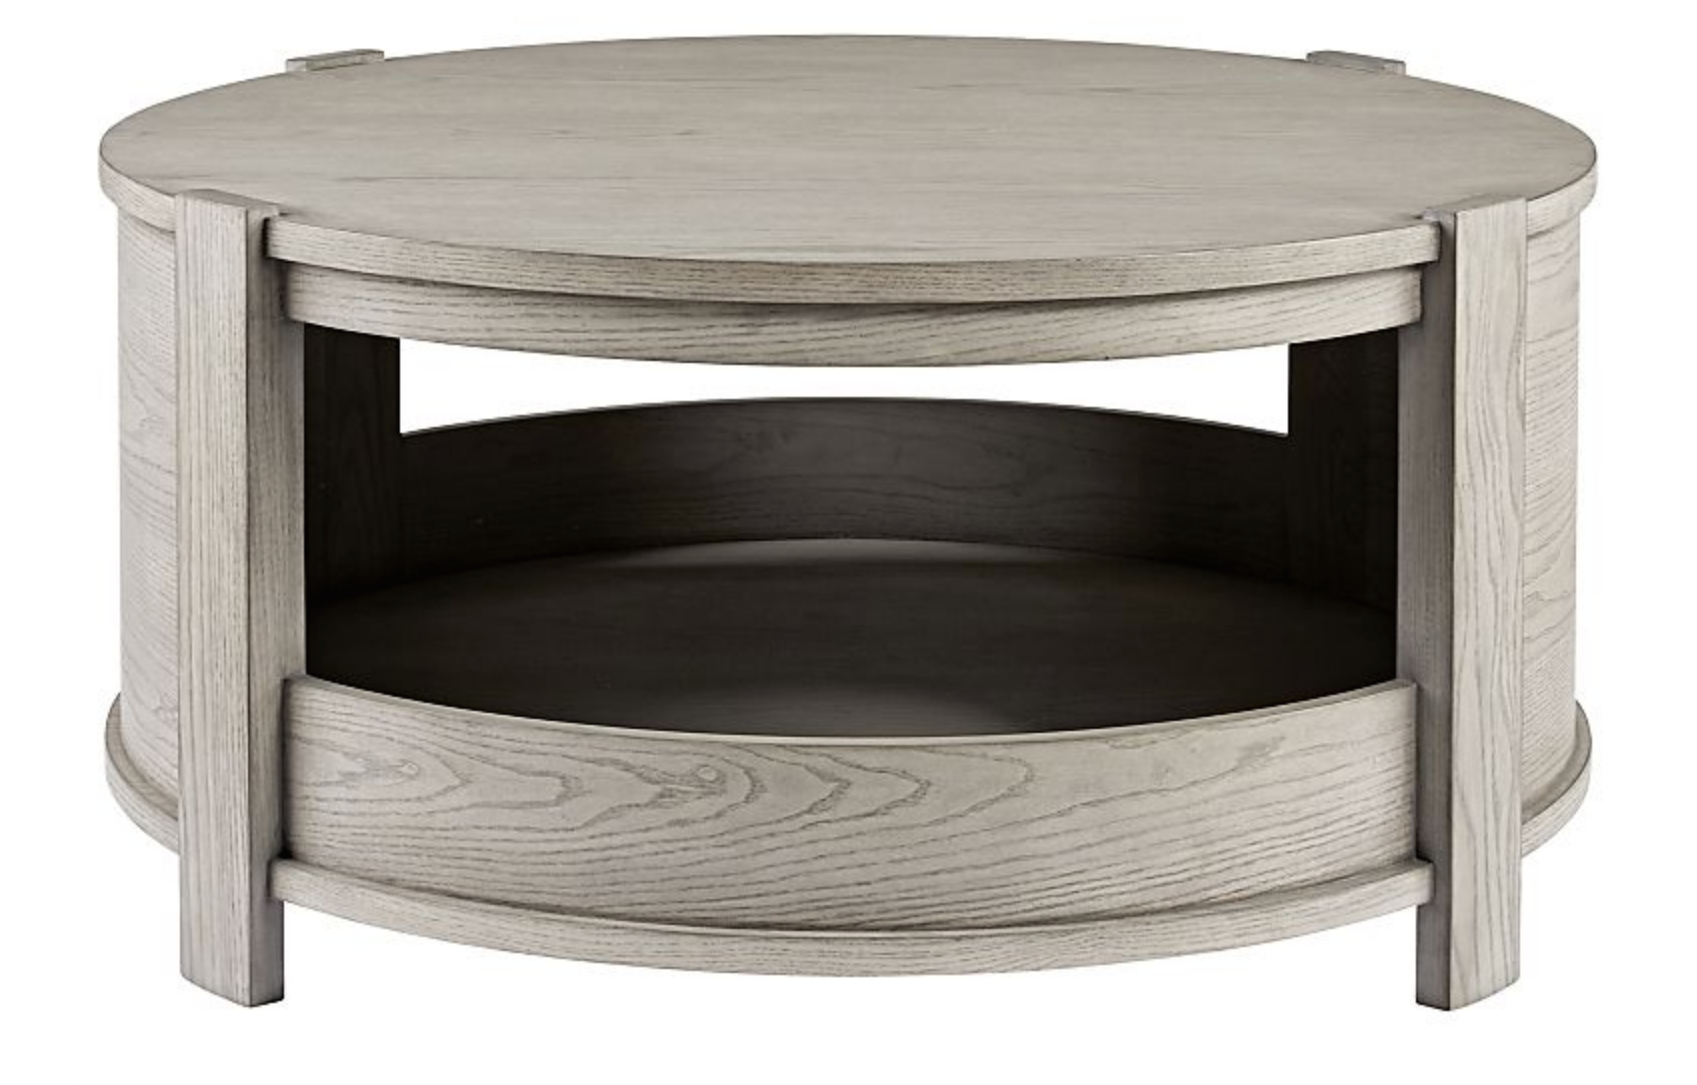 Rotunda Grey Stain Kids Table with Storage - Image 2